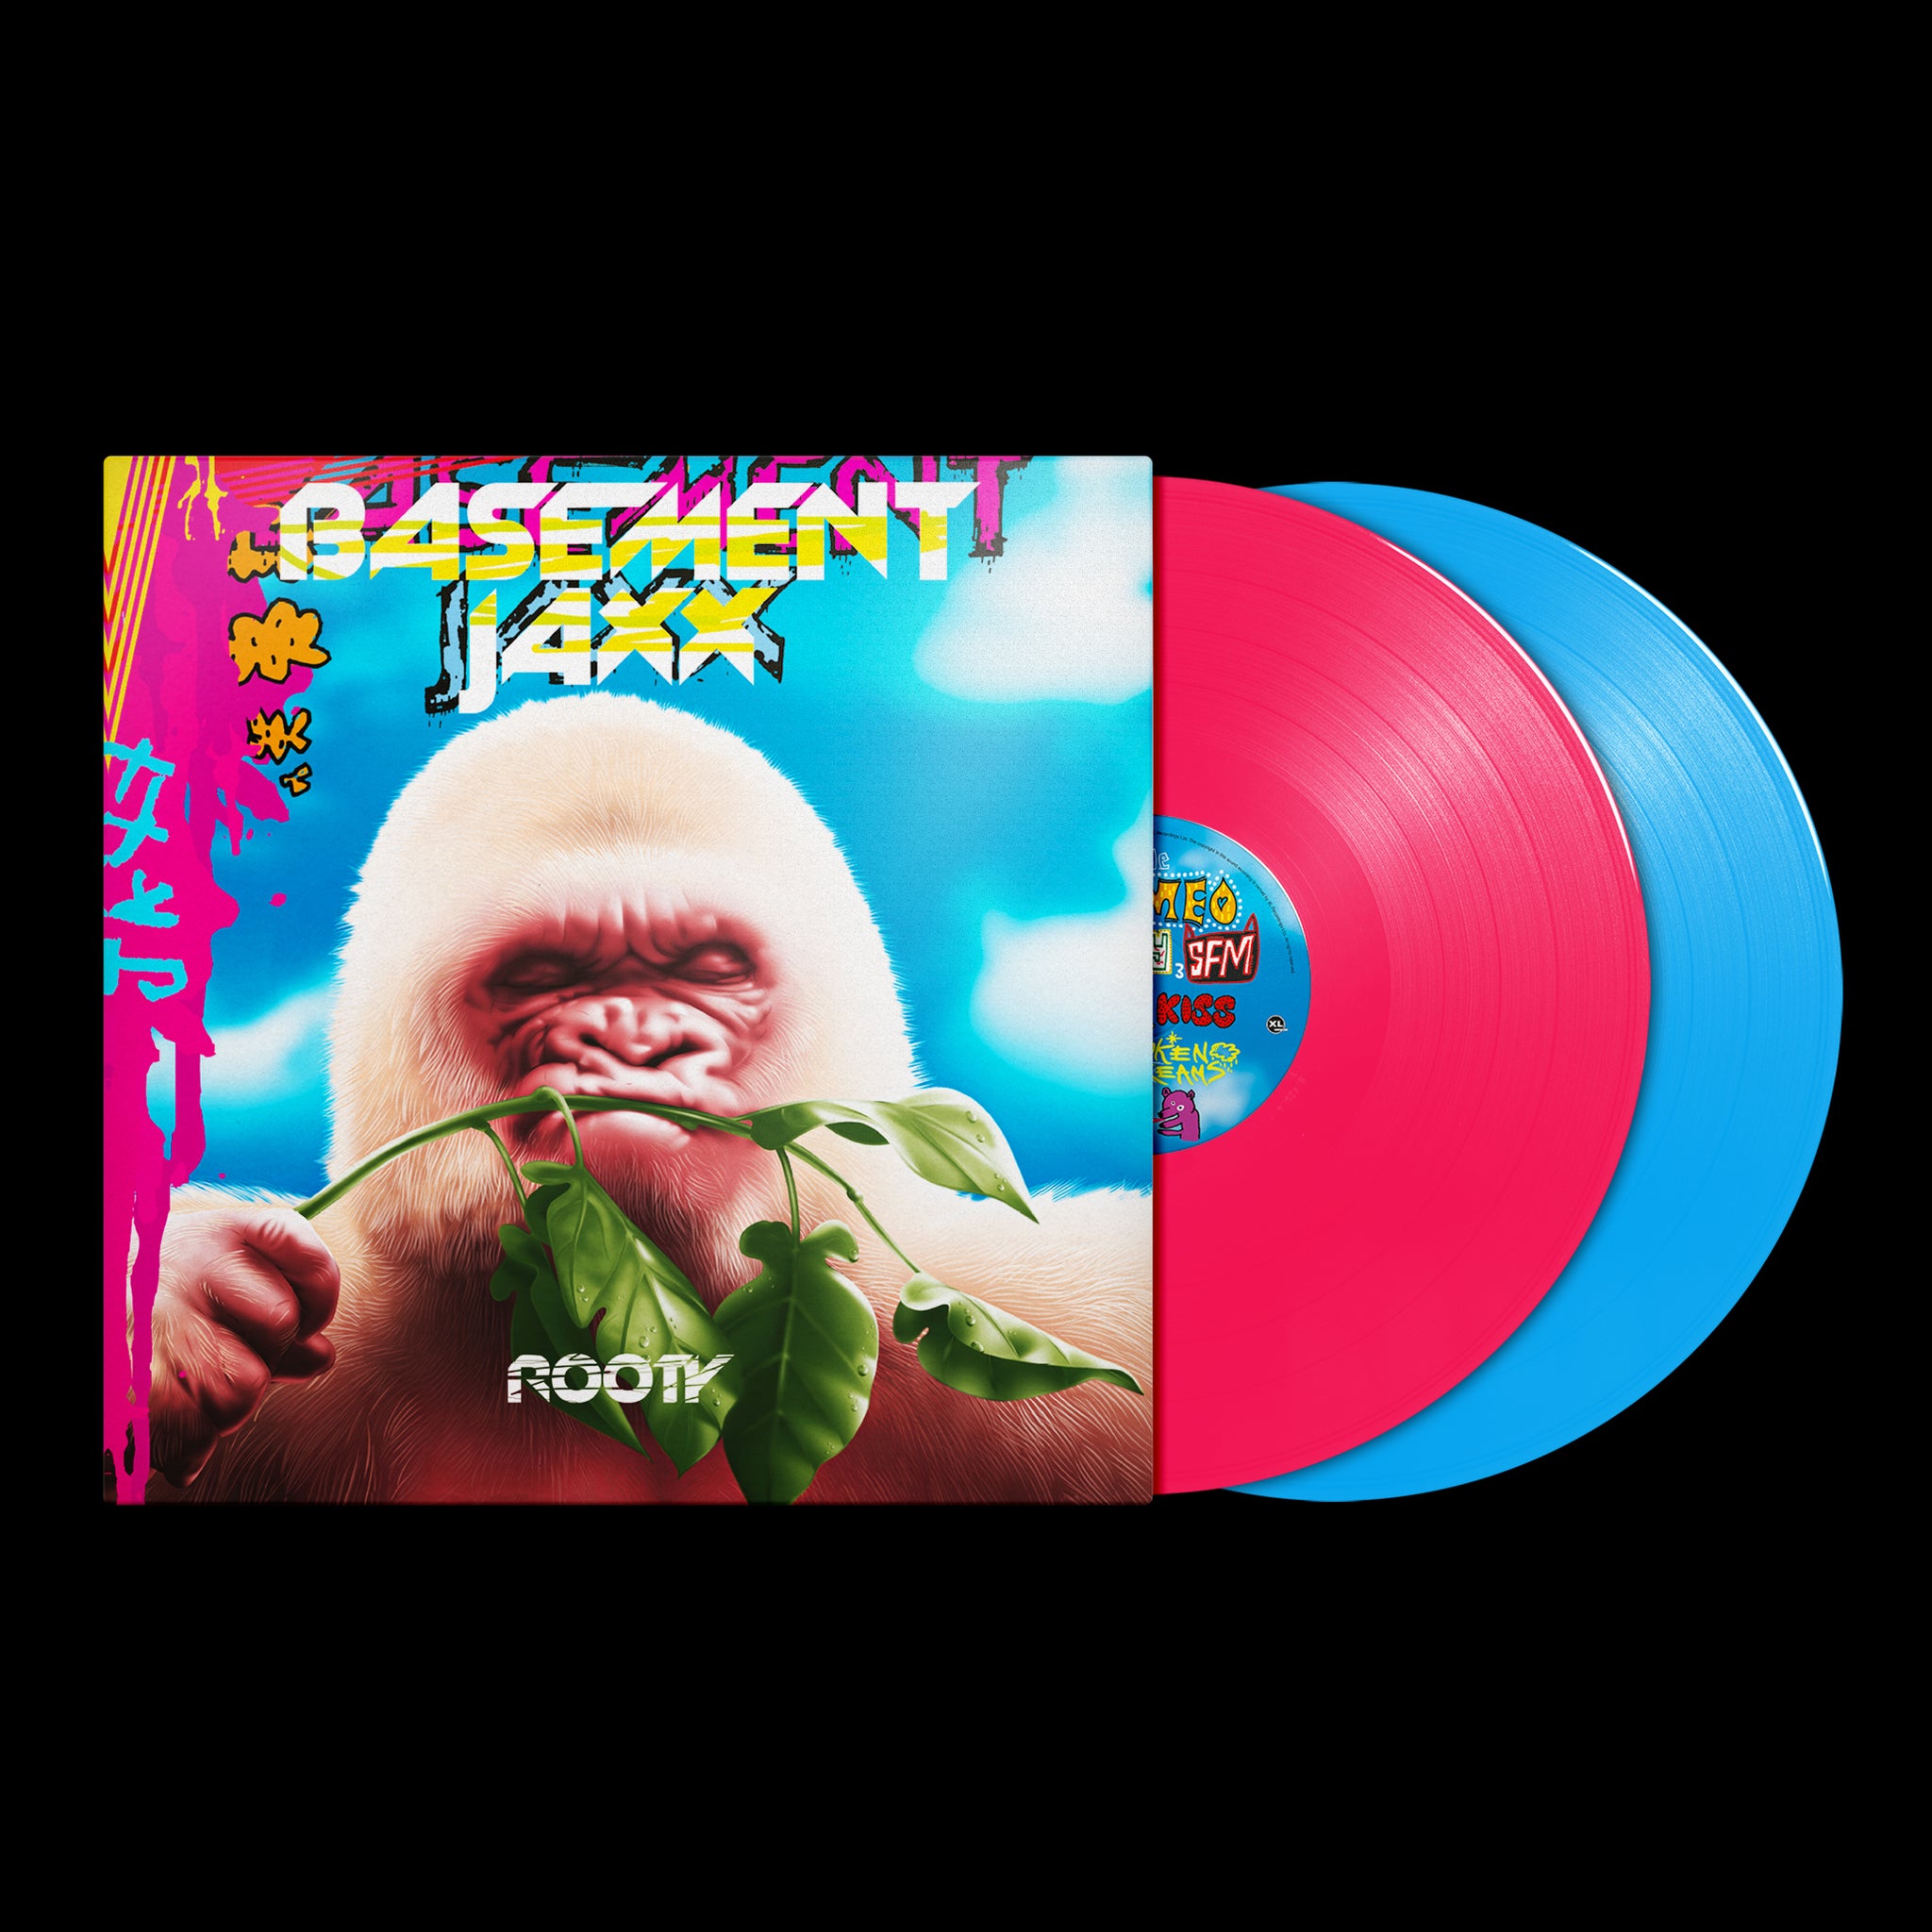 Basement Jaxx - Rooty (Limited Edition 2LP Pink & Blue Vinyl)